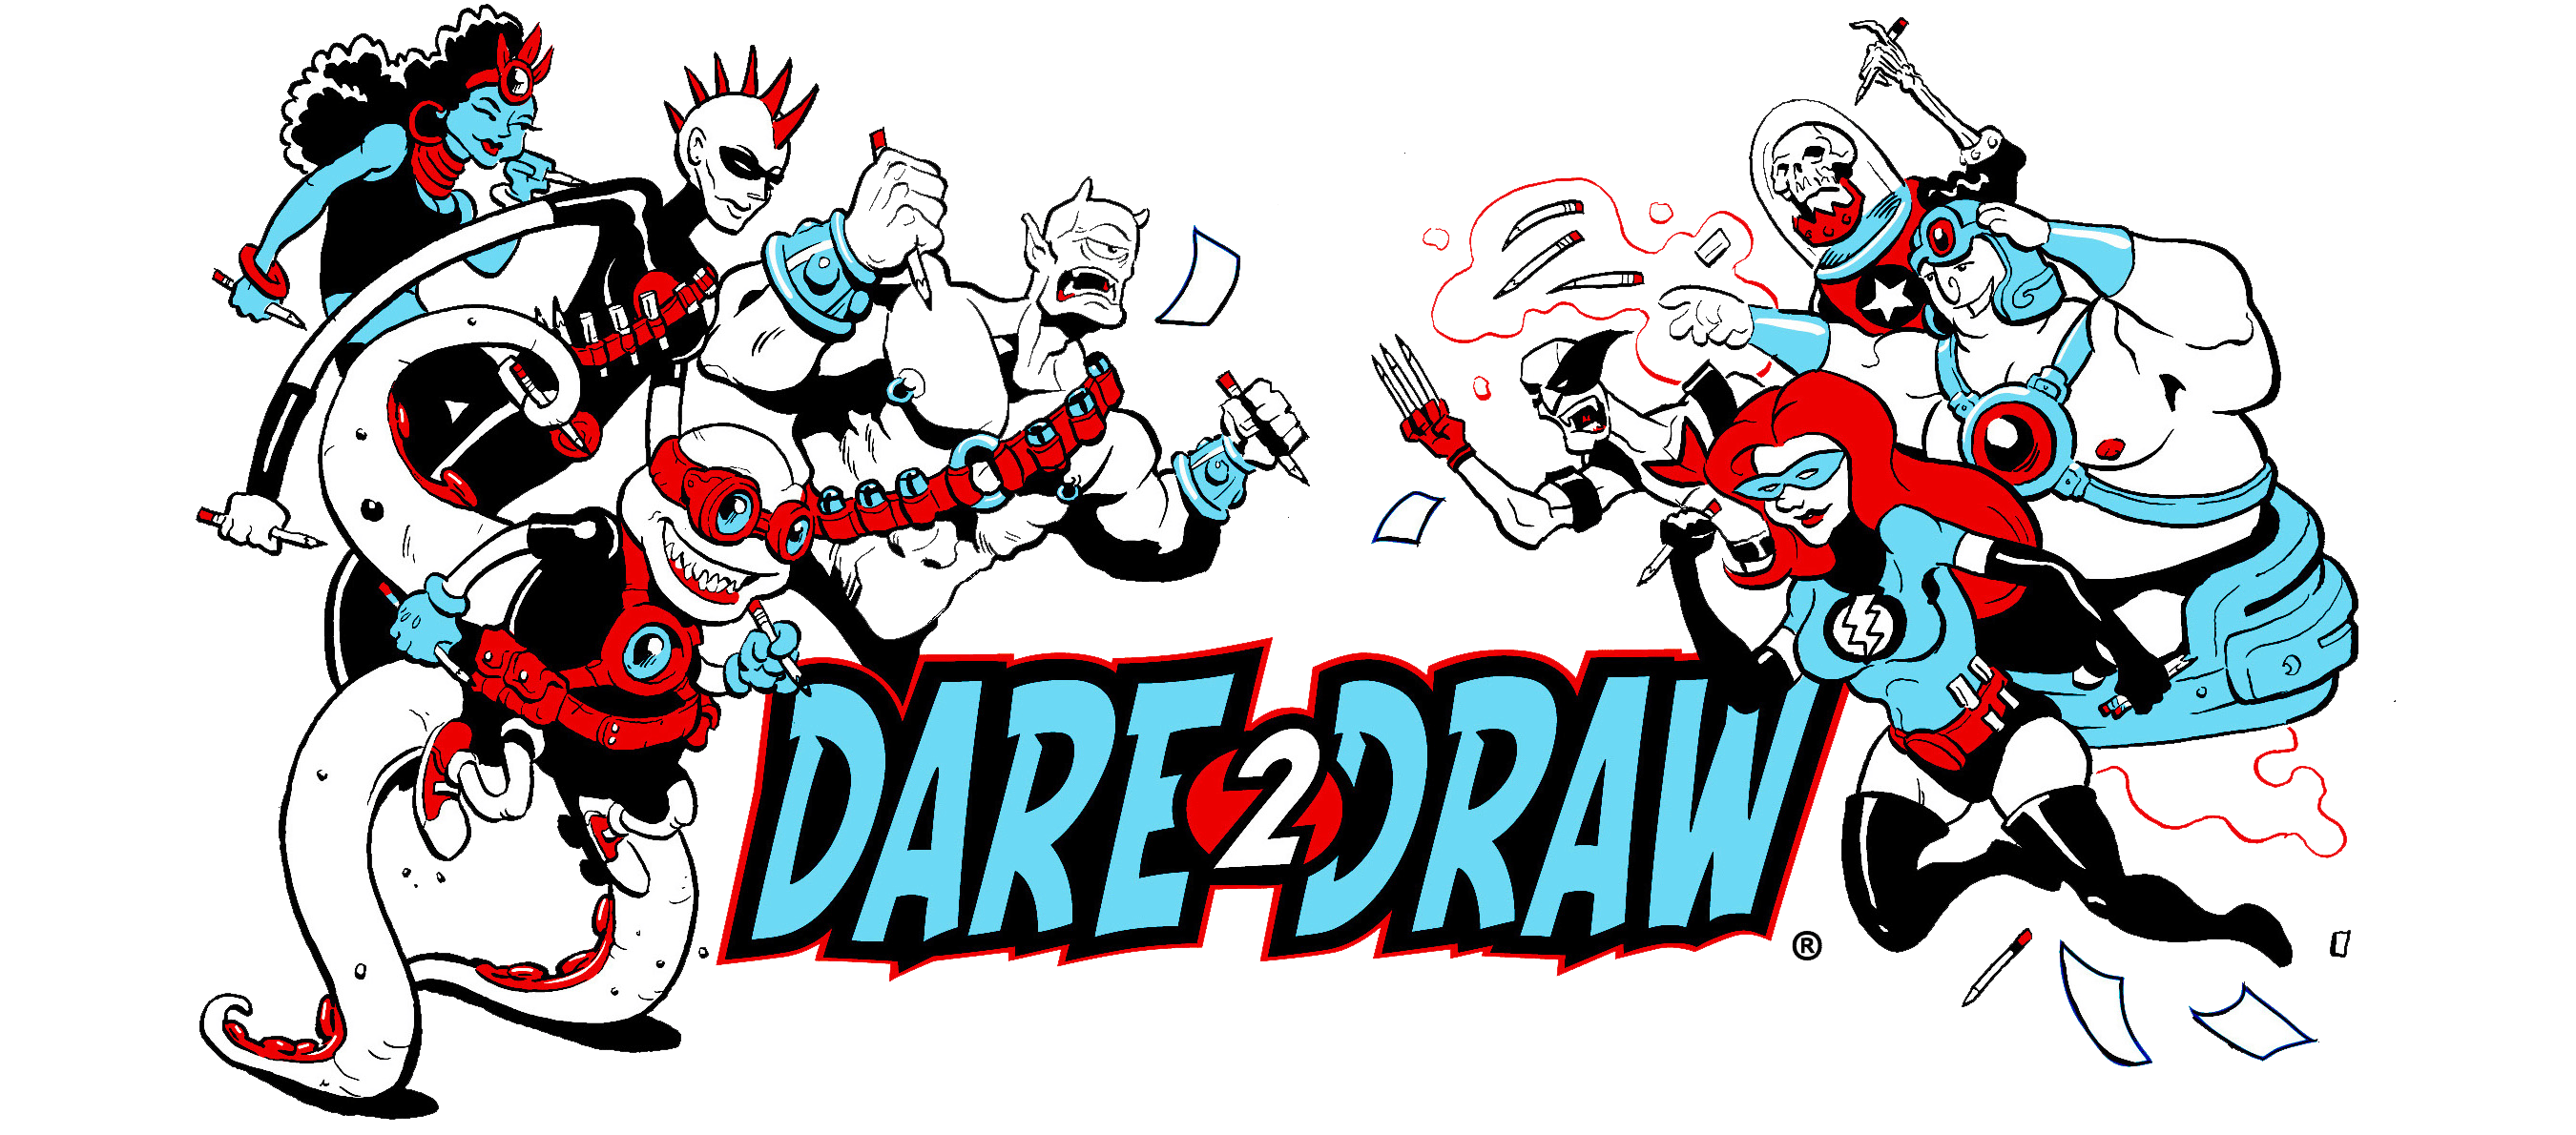 dare2draw.org, dare 2 draw, creatorcode, rj huneke, powkabam